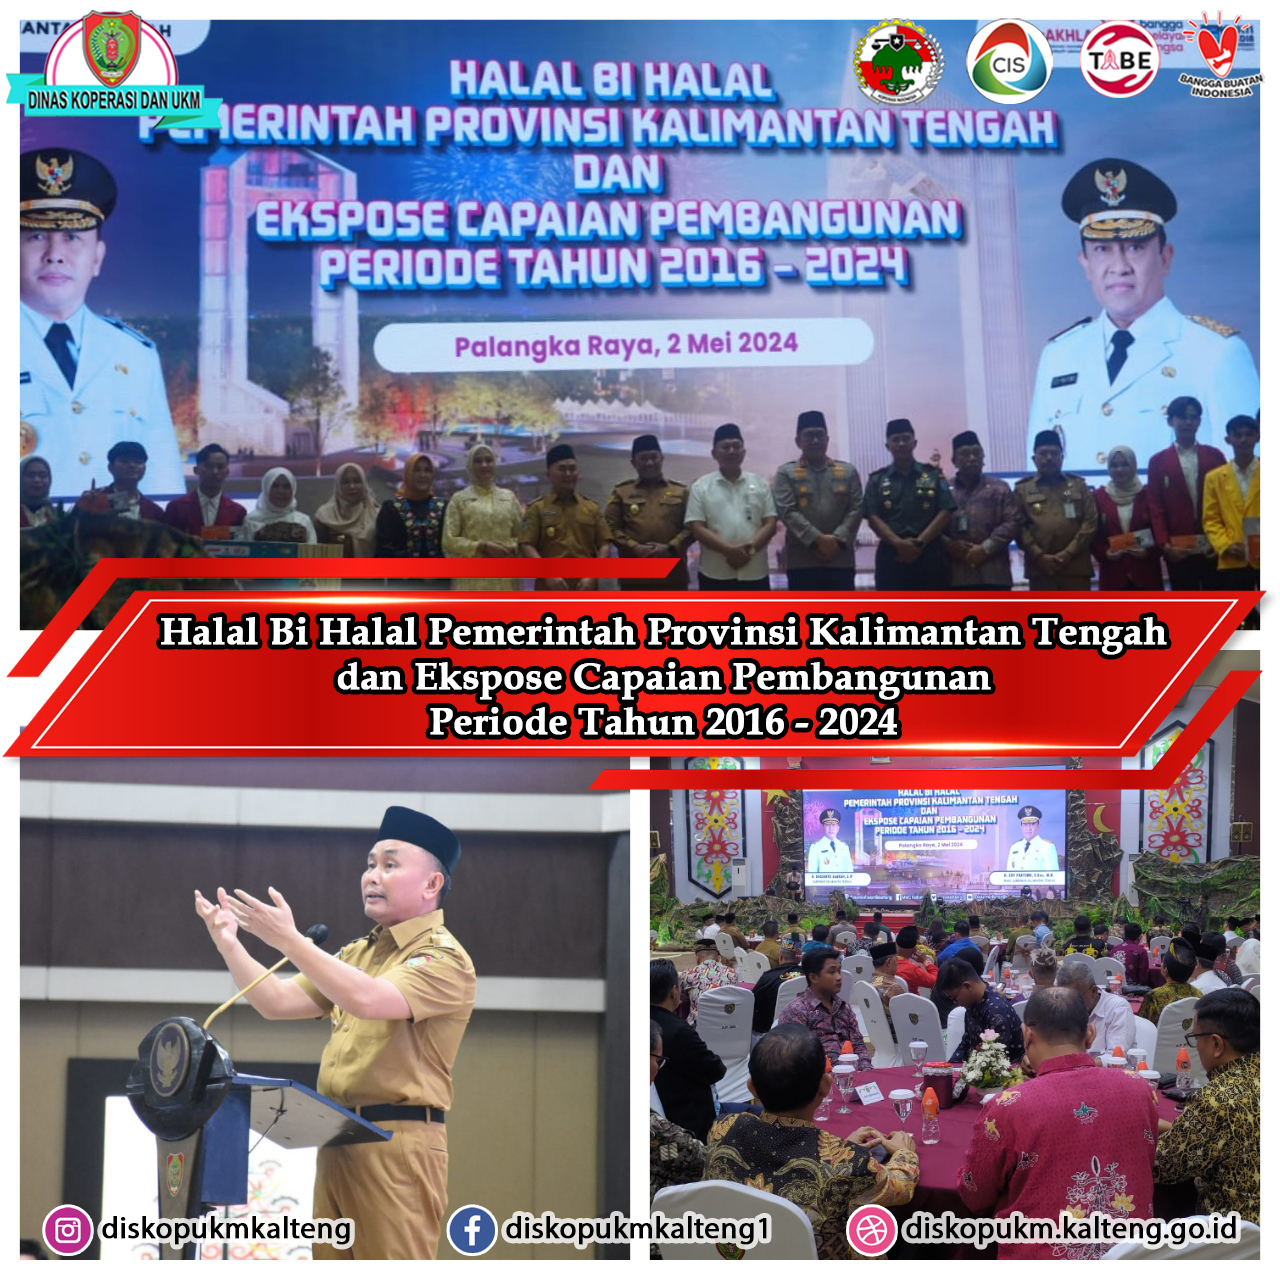 Gubernur Kalimantan Tengah H. Sugianto Sabran Ekspose Capaian Pembangunan Periode Tahun 2016 – 2024